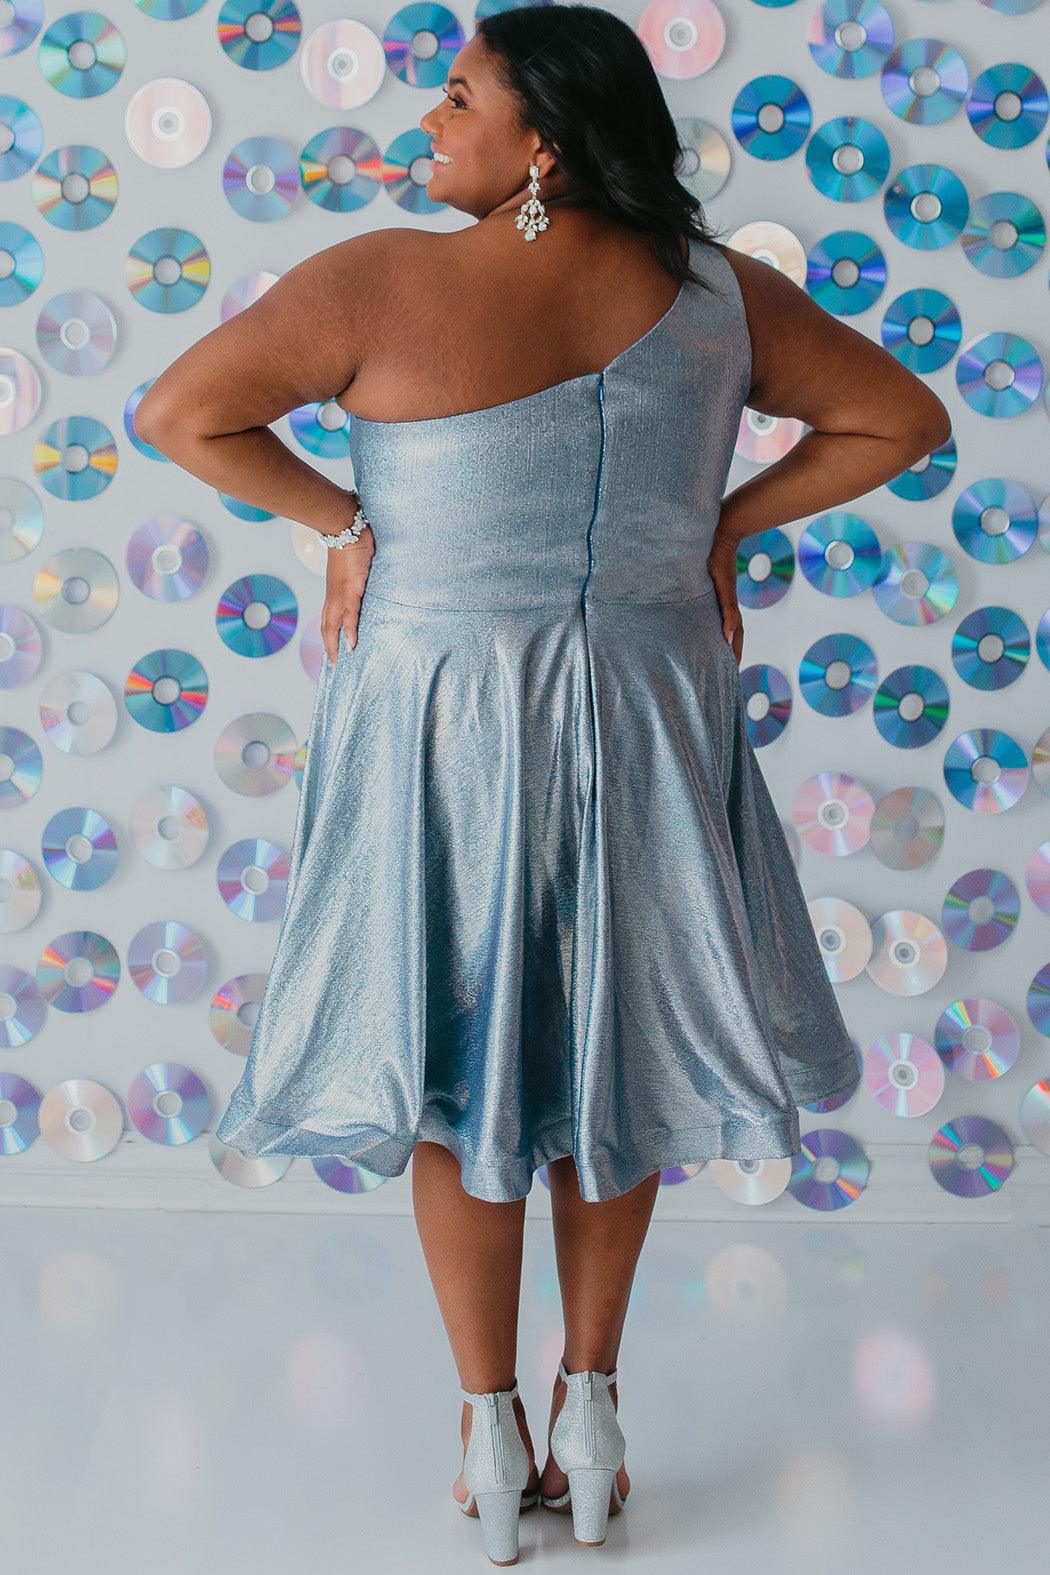 Prom Dresses Plus Size One Shoulder Homecoming Prom Dress Metallic Blue